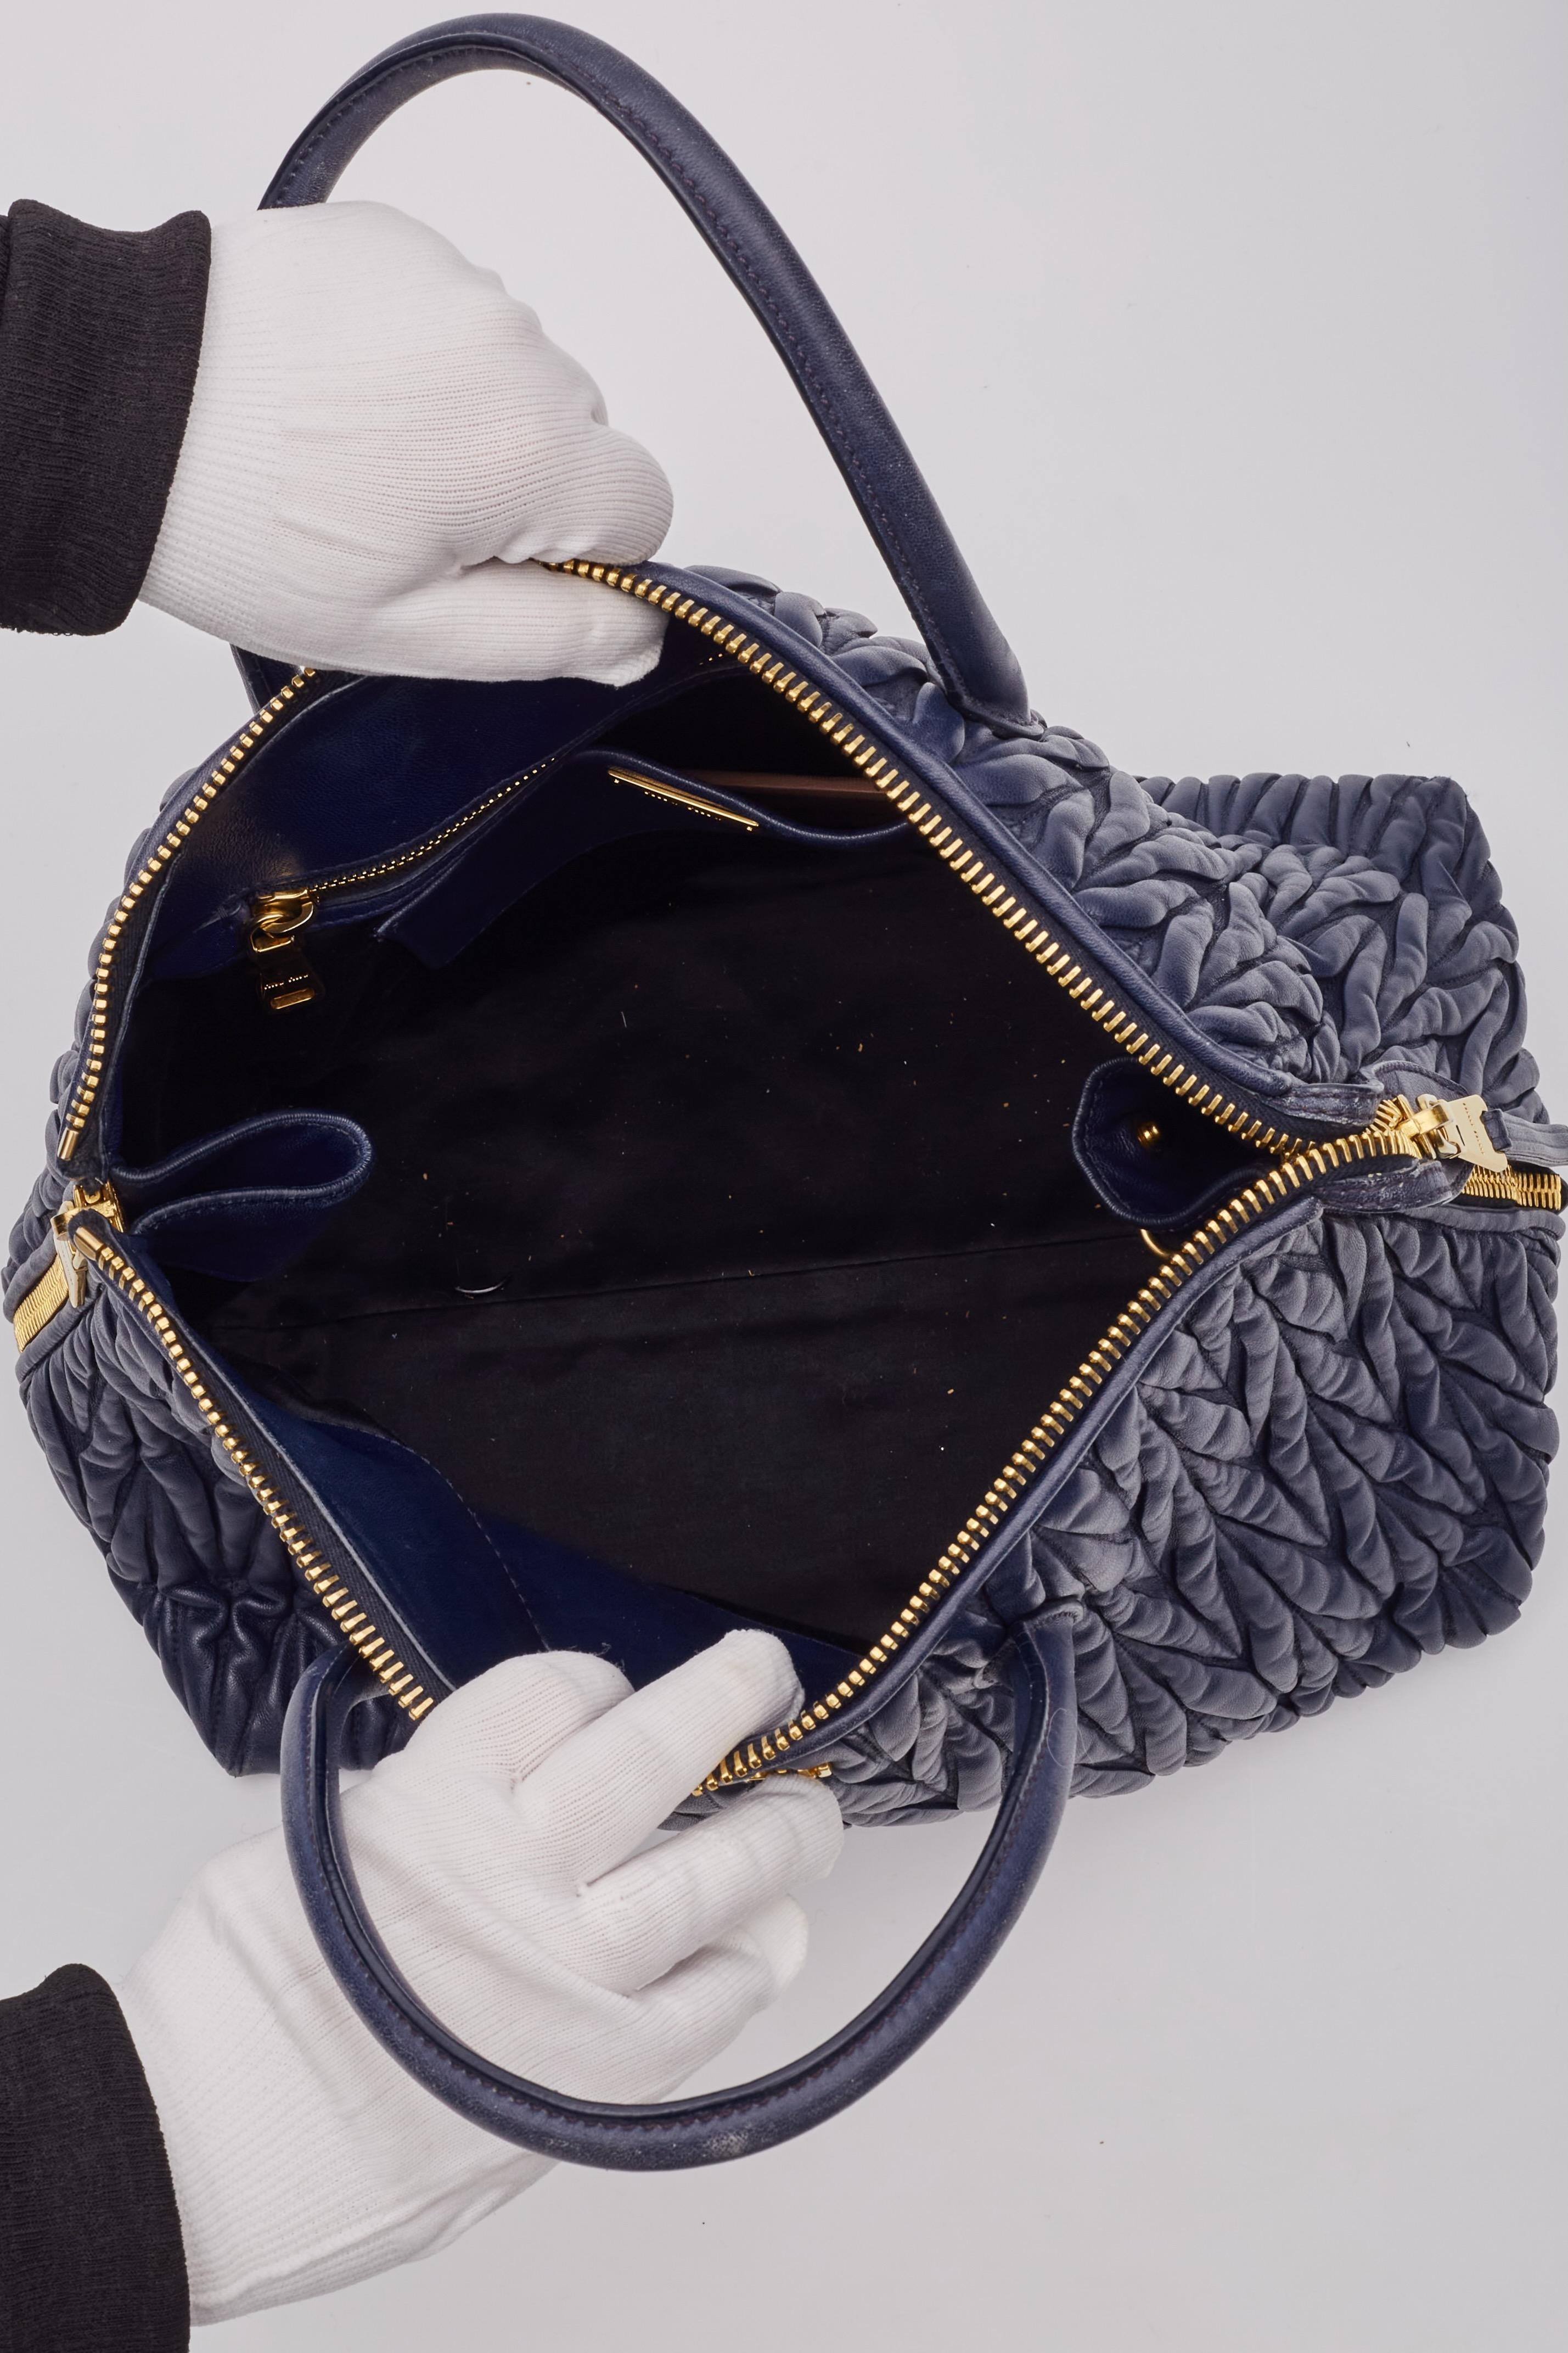 Miu Miu Matelasse Chevron Quilting Navy Nappa Leather Shoulder Bag For Sale 4